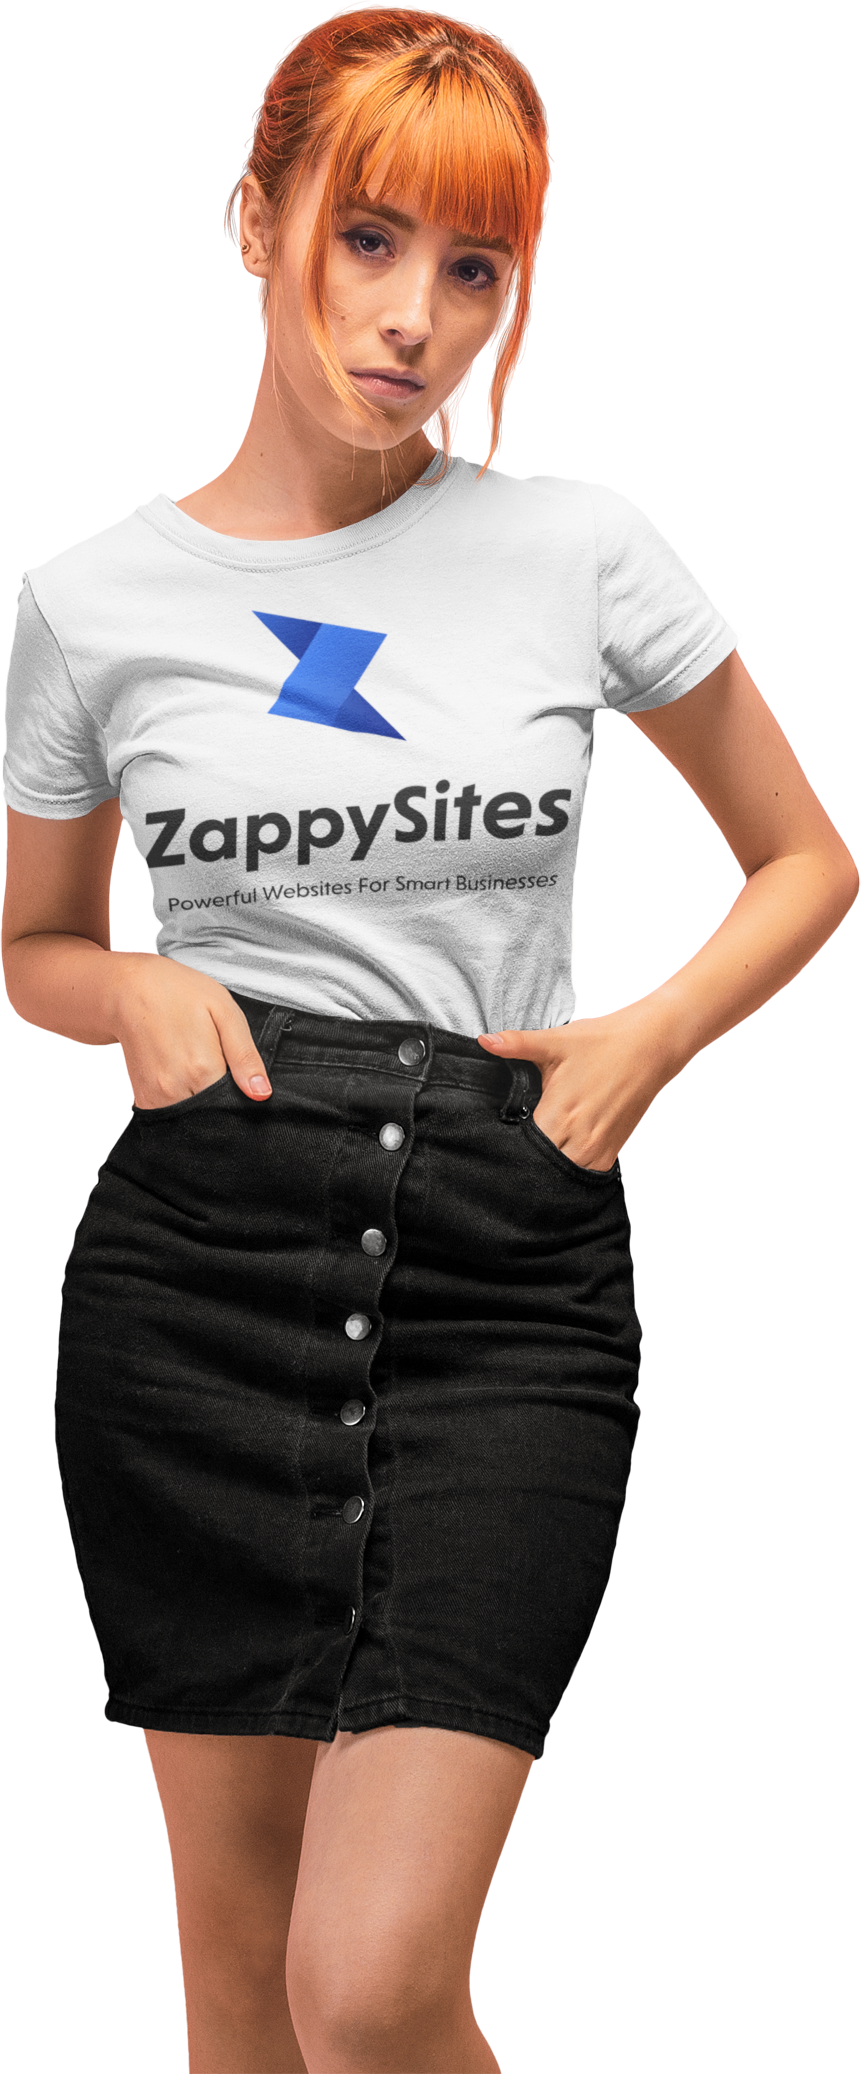 ZappySites Web Designer